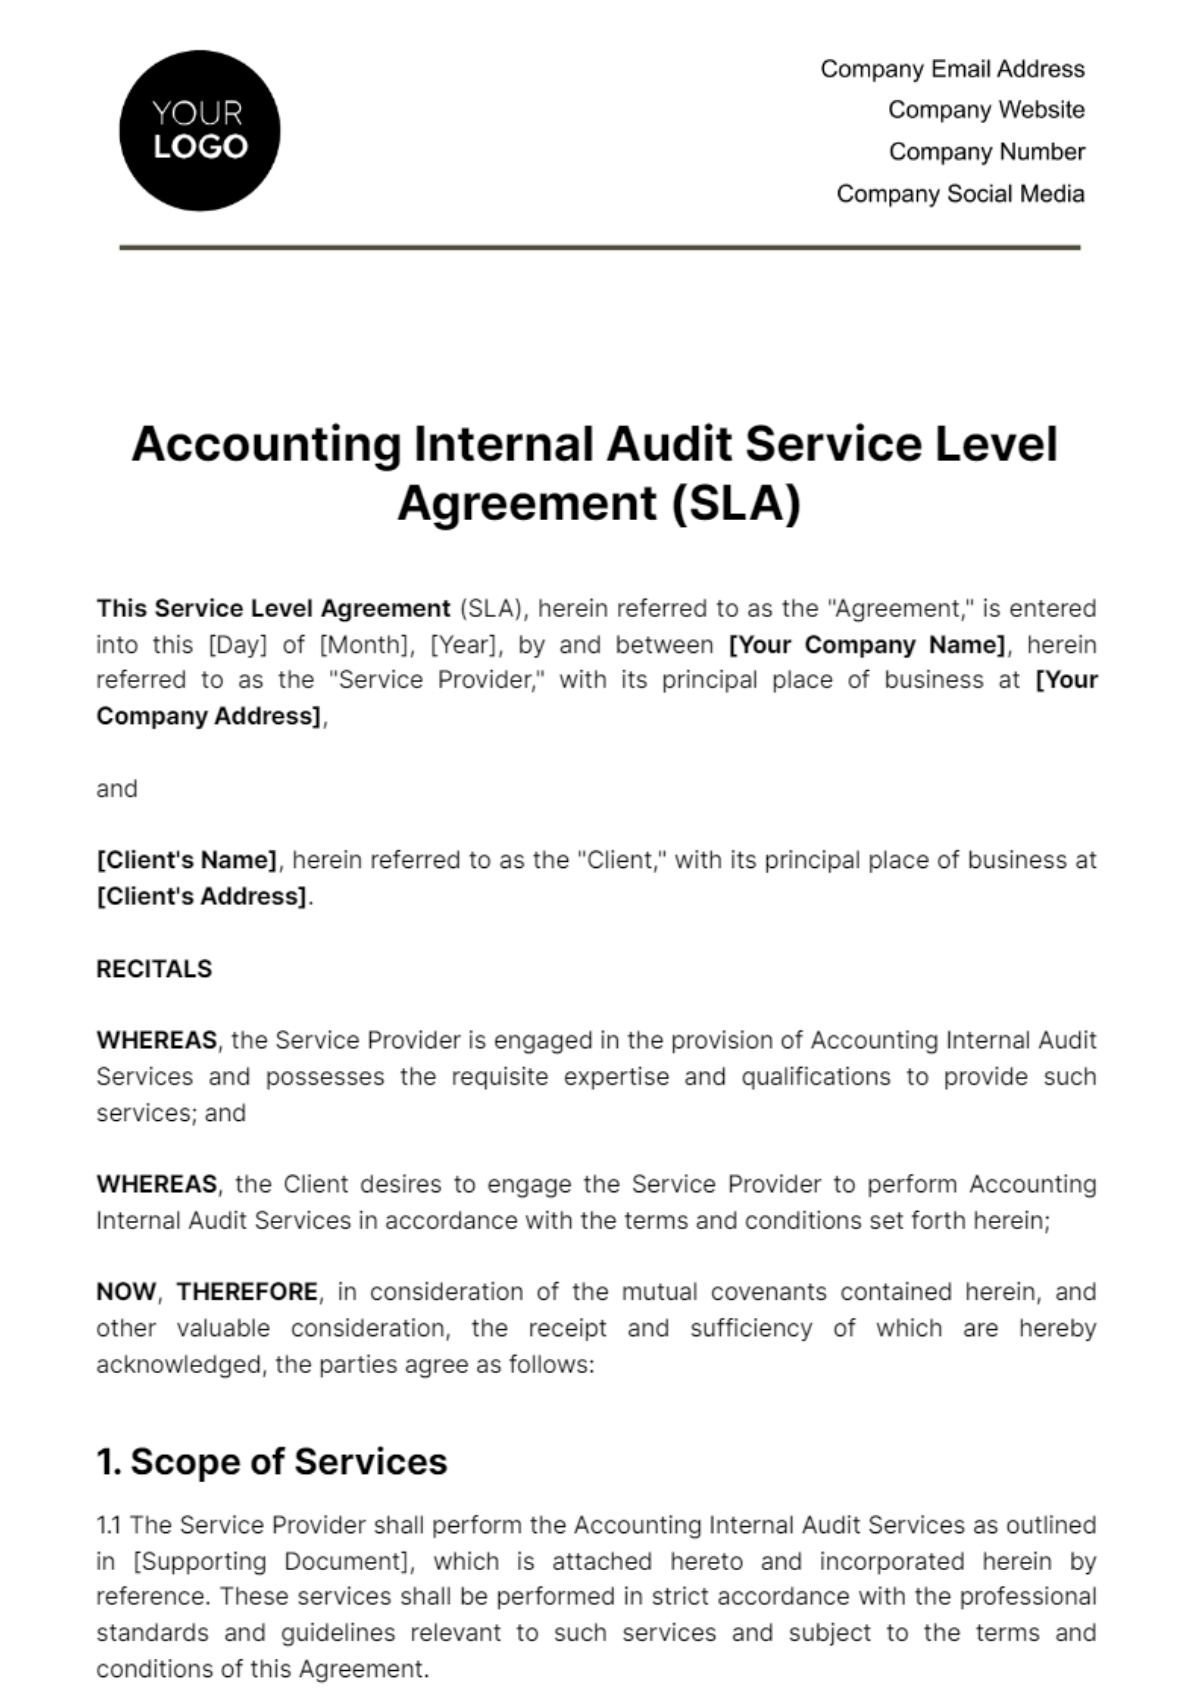 Free Accounting Internal Audit SLA Template